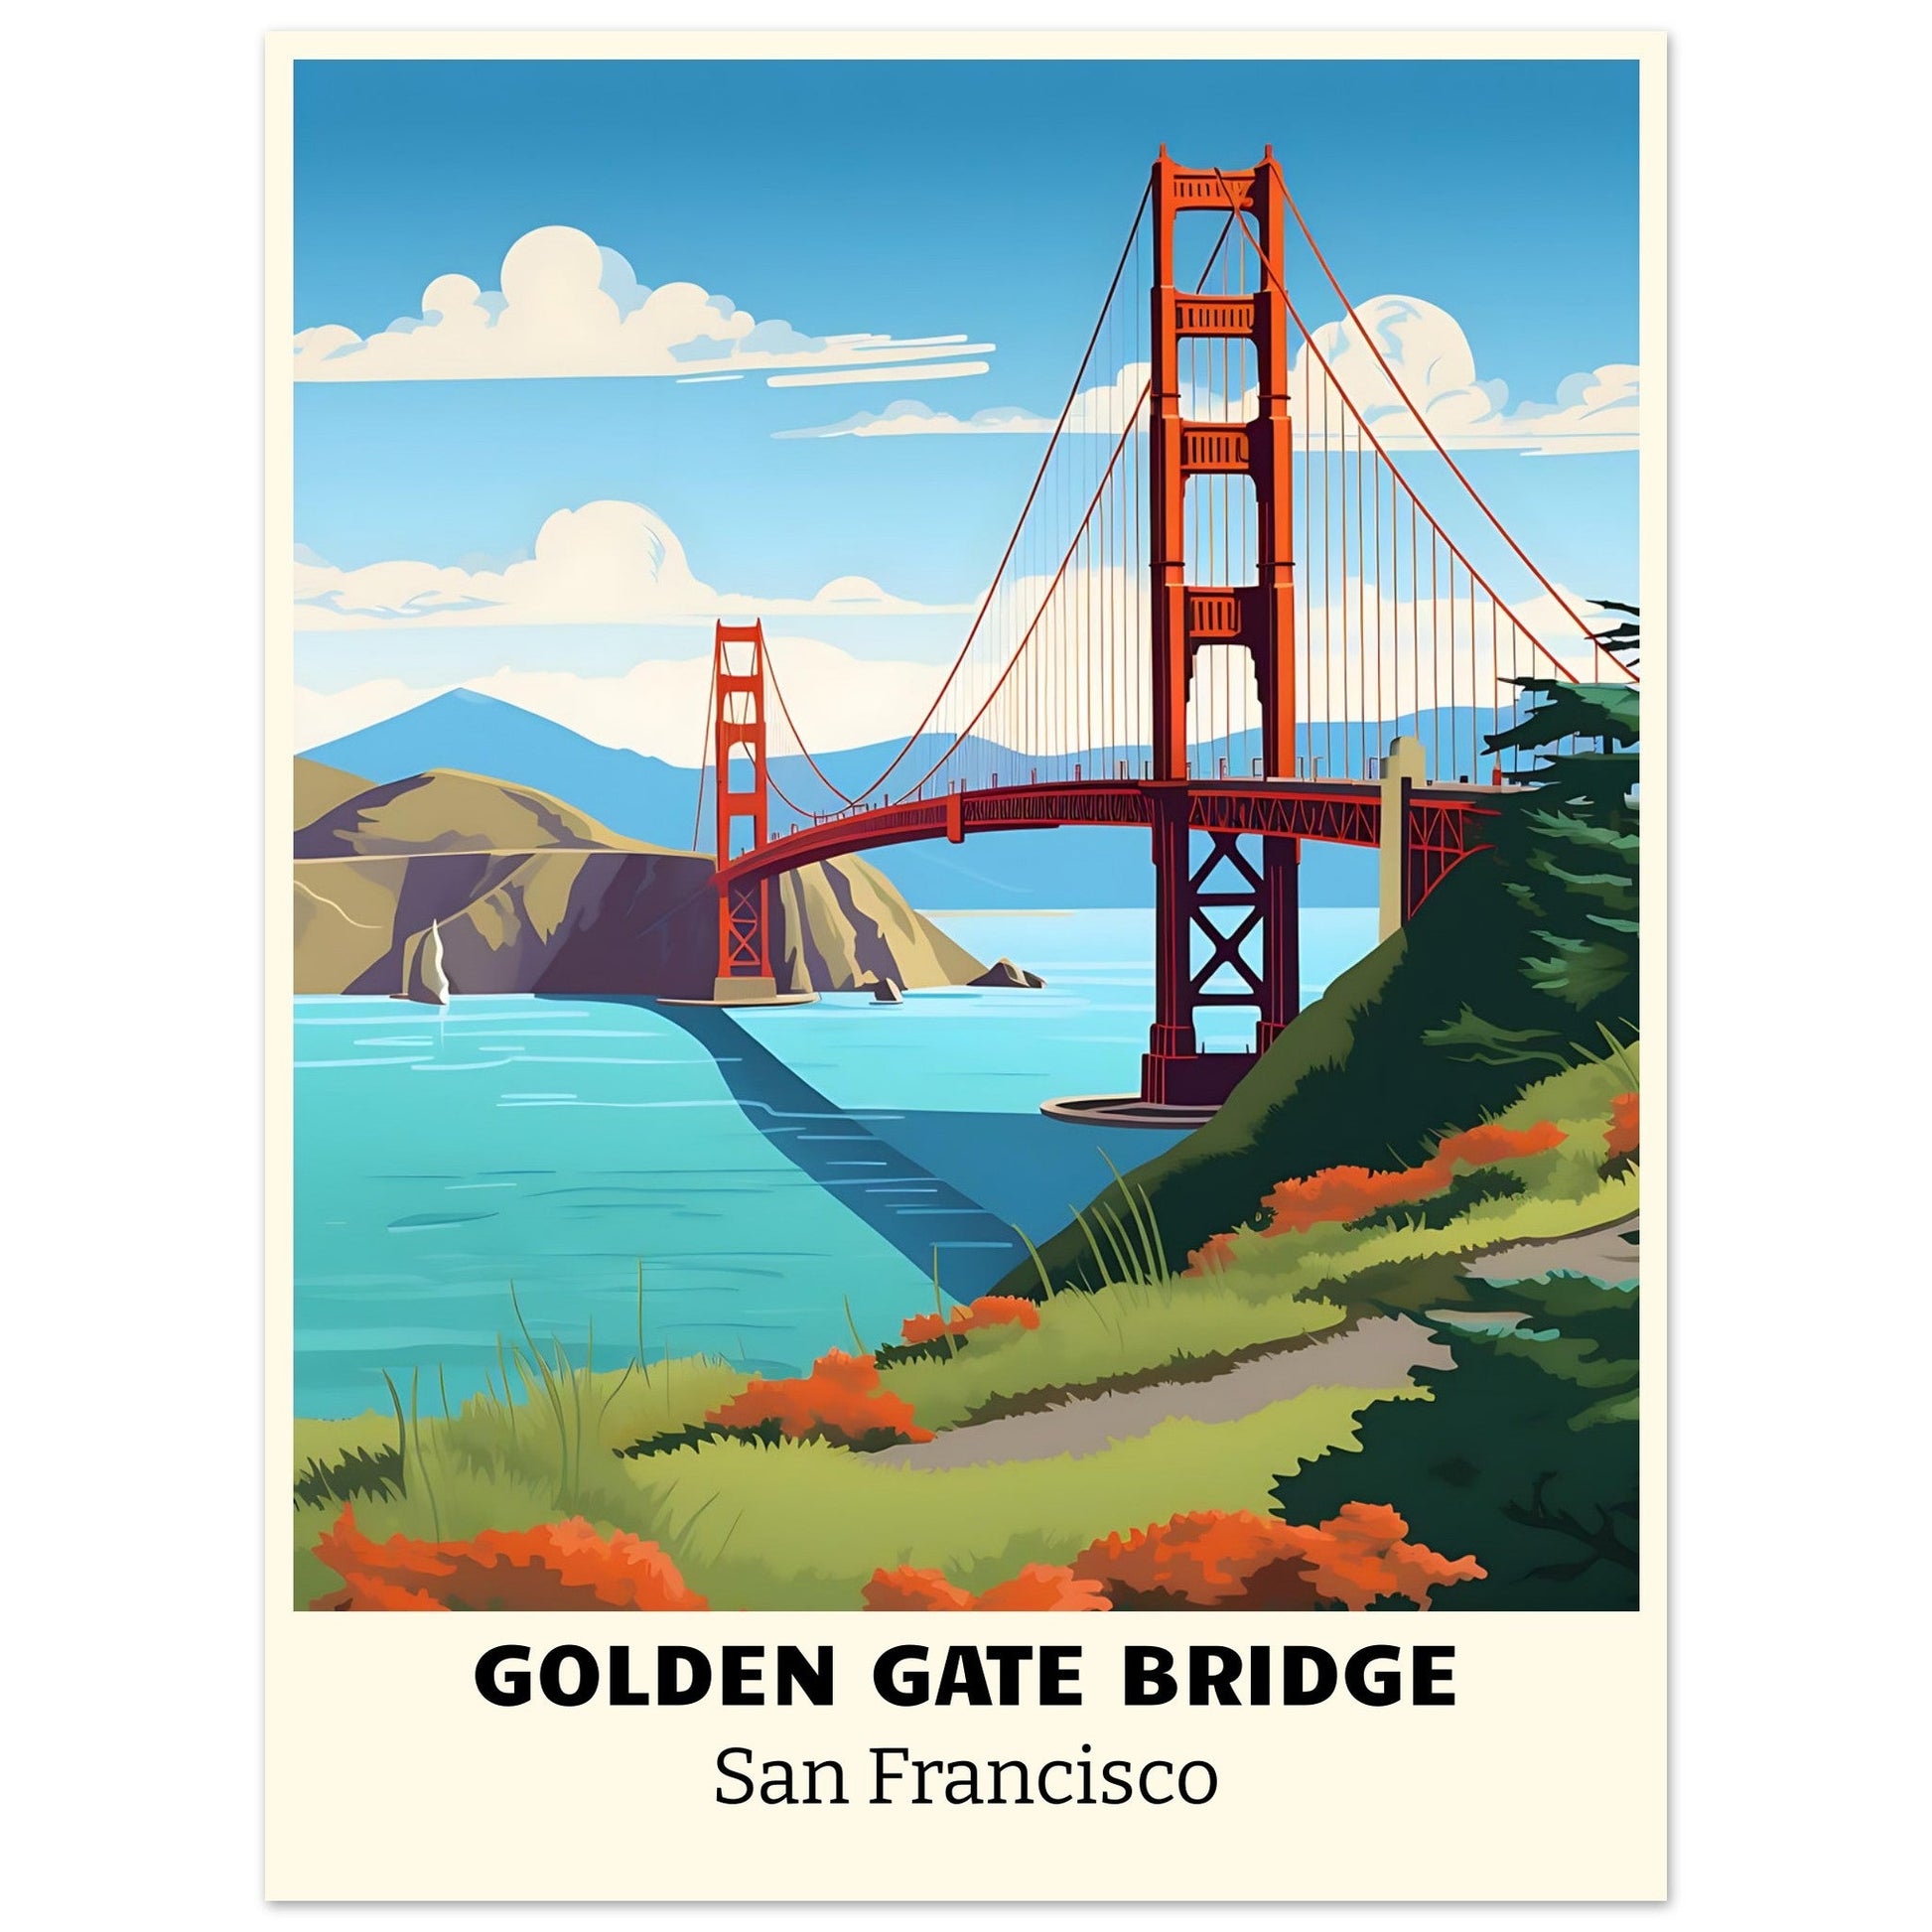 Golden Gate Bridge | San Francisco, Golden Gate Bridge, San Fransisco, Travel Poster, #illieeart #